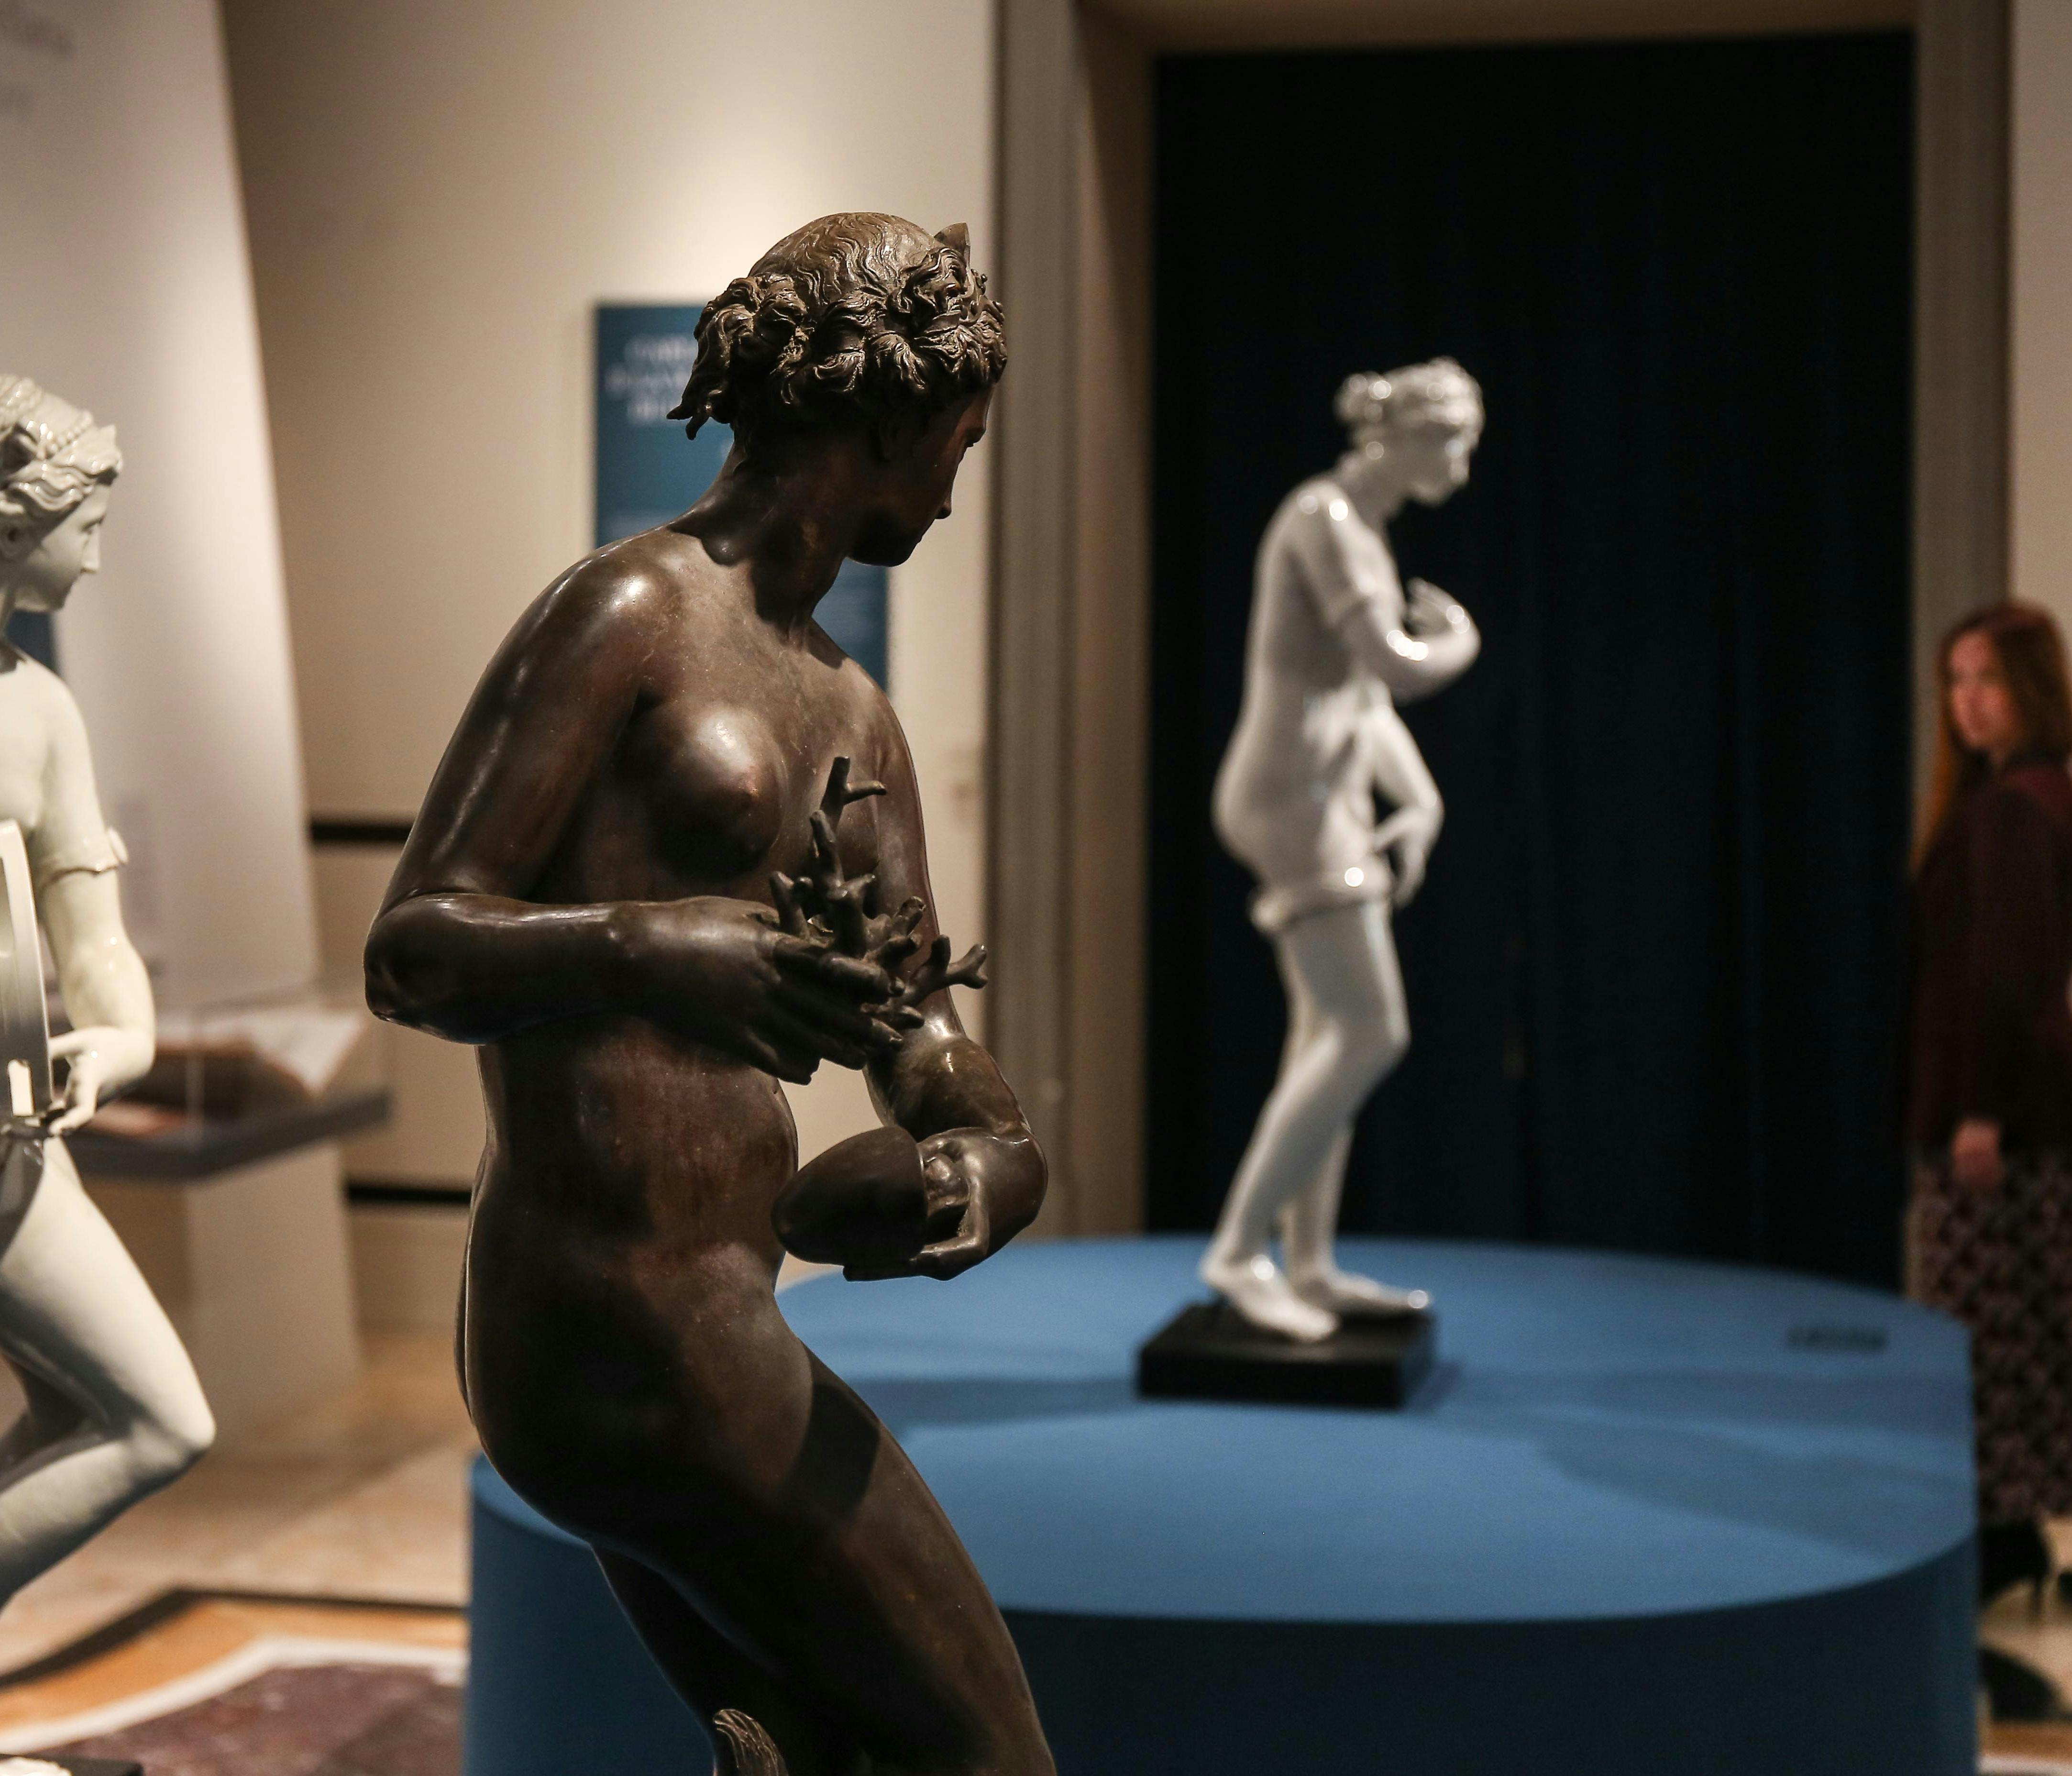 Tre grandi sculture in bronzo e in porcellana bianca